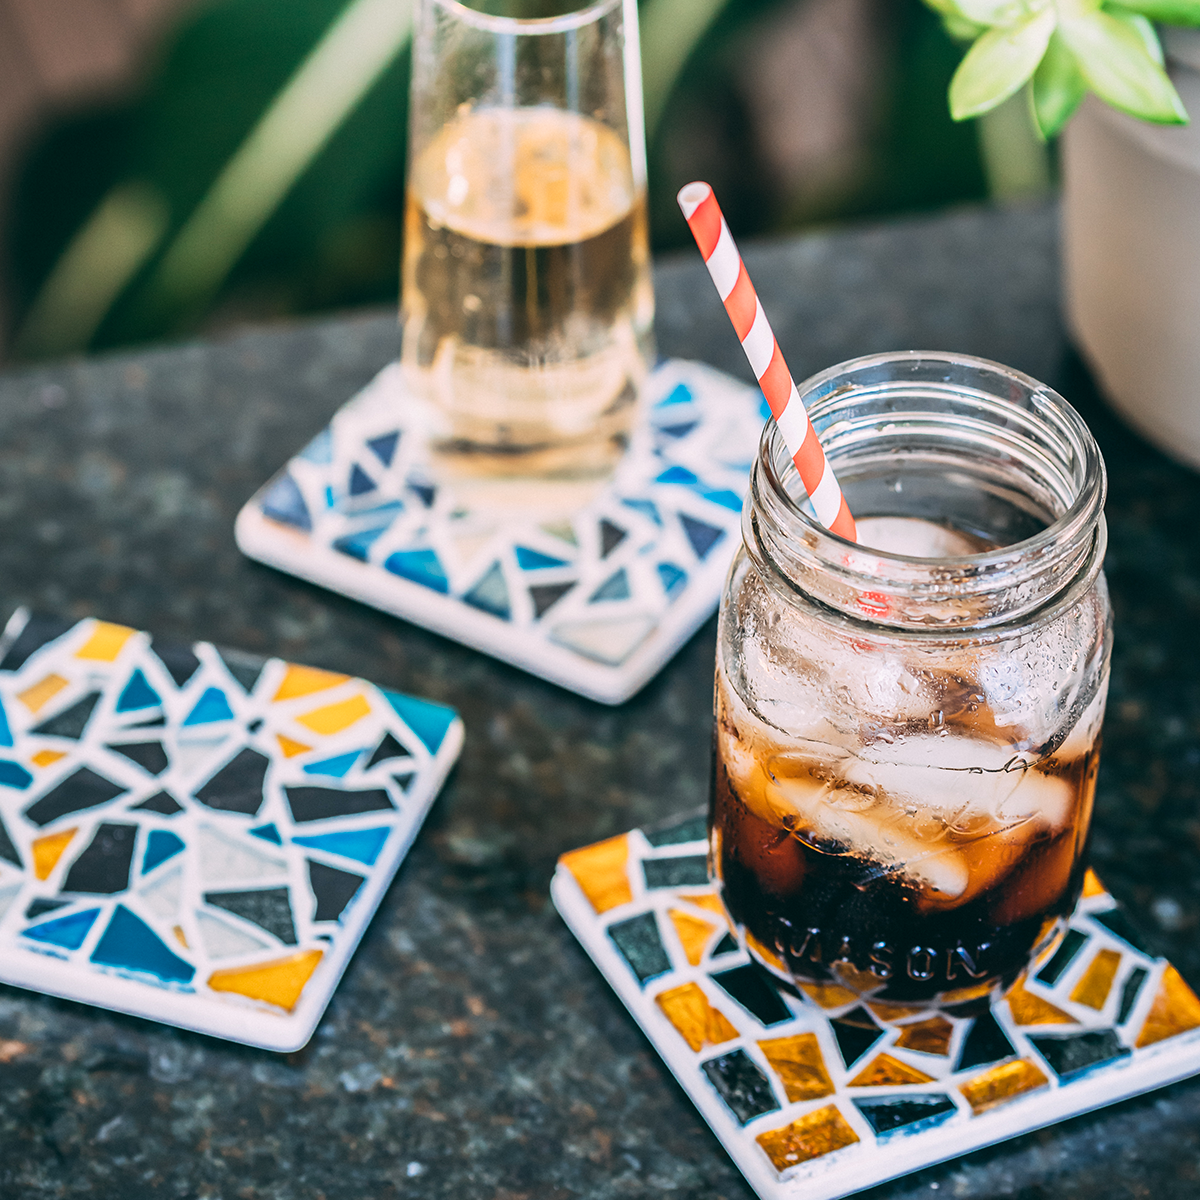 Three handmade mosaic coasters with drinks